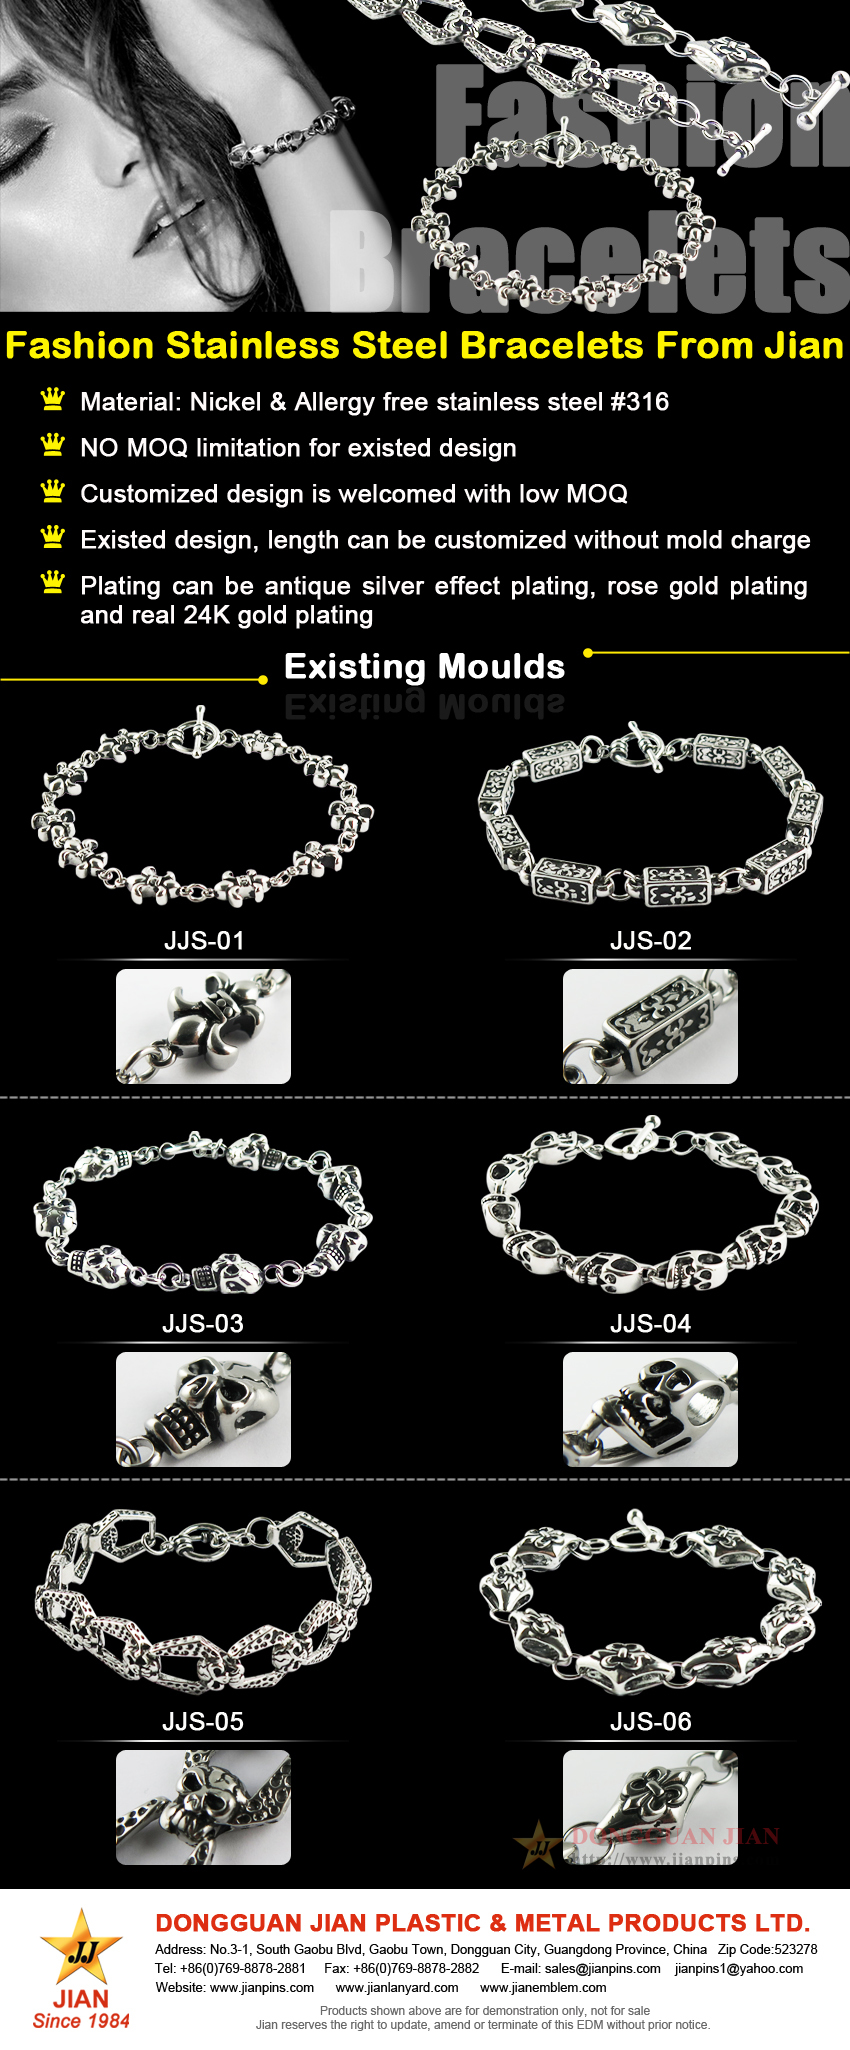 Fashion Stainless Steel Bracelets